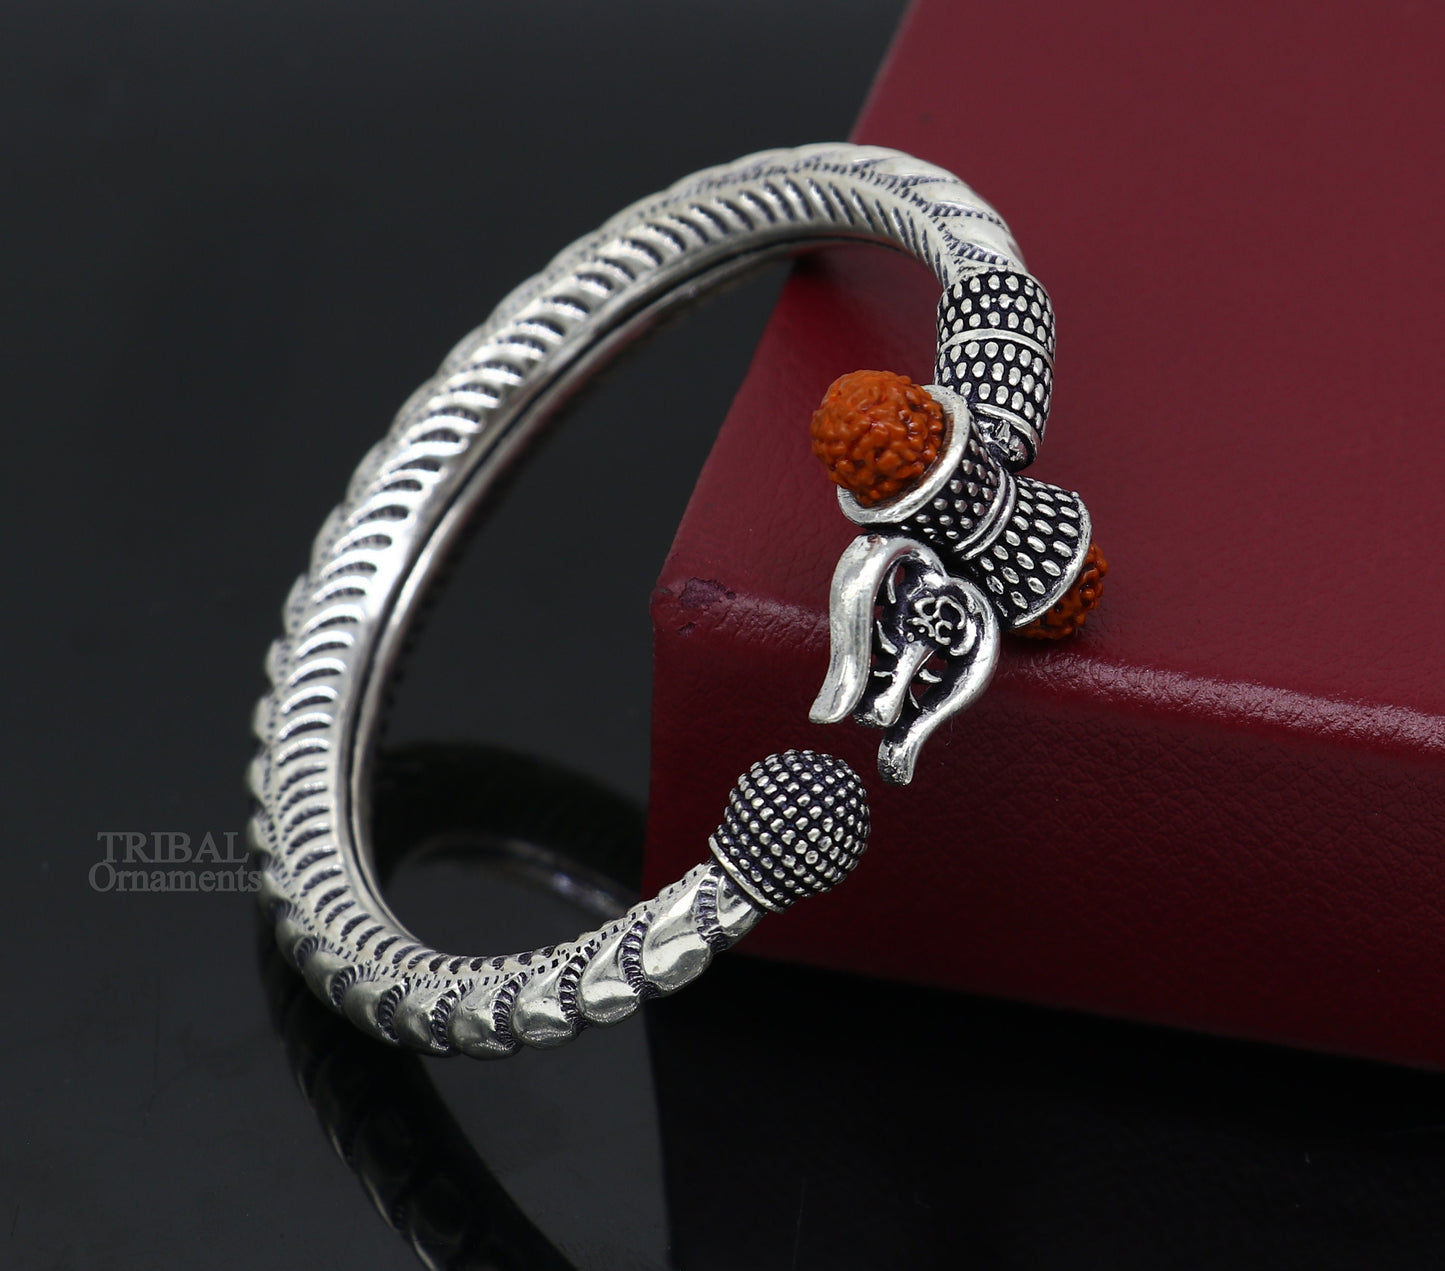 Exclusive 925 Sterling silver handmade chitai work Lord Shiva trident trishul bangle bracelet natural Rudraksha beads customized kada nsk440 - TRIBAL ORNAMENTS